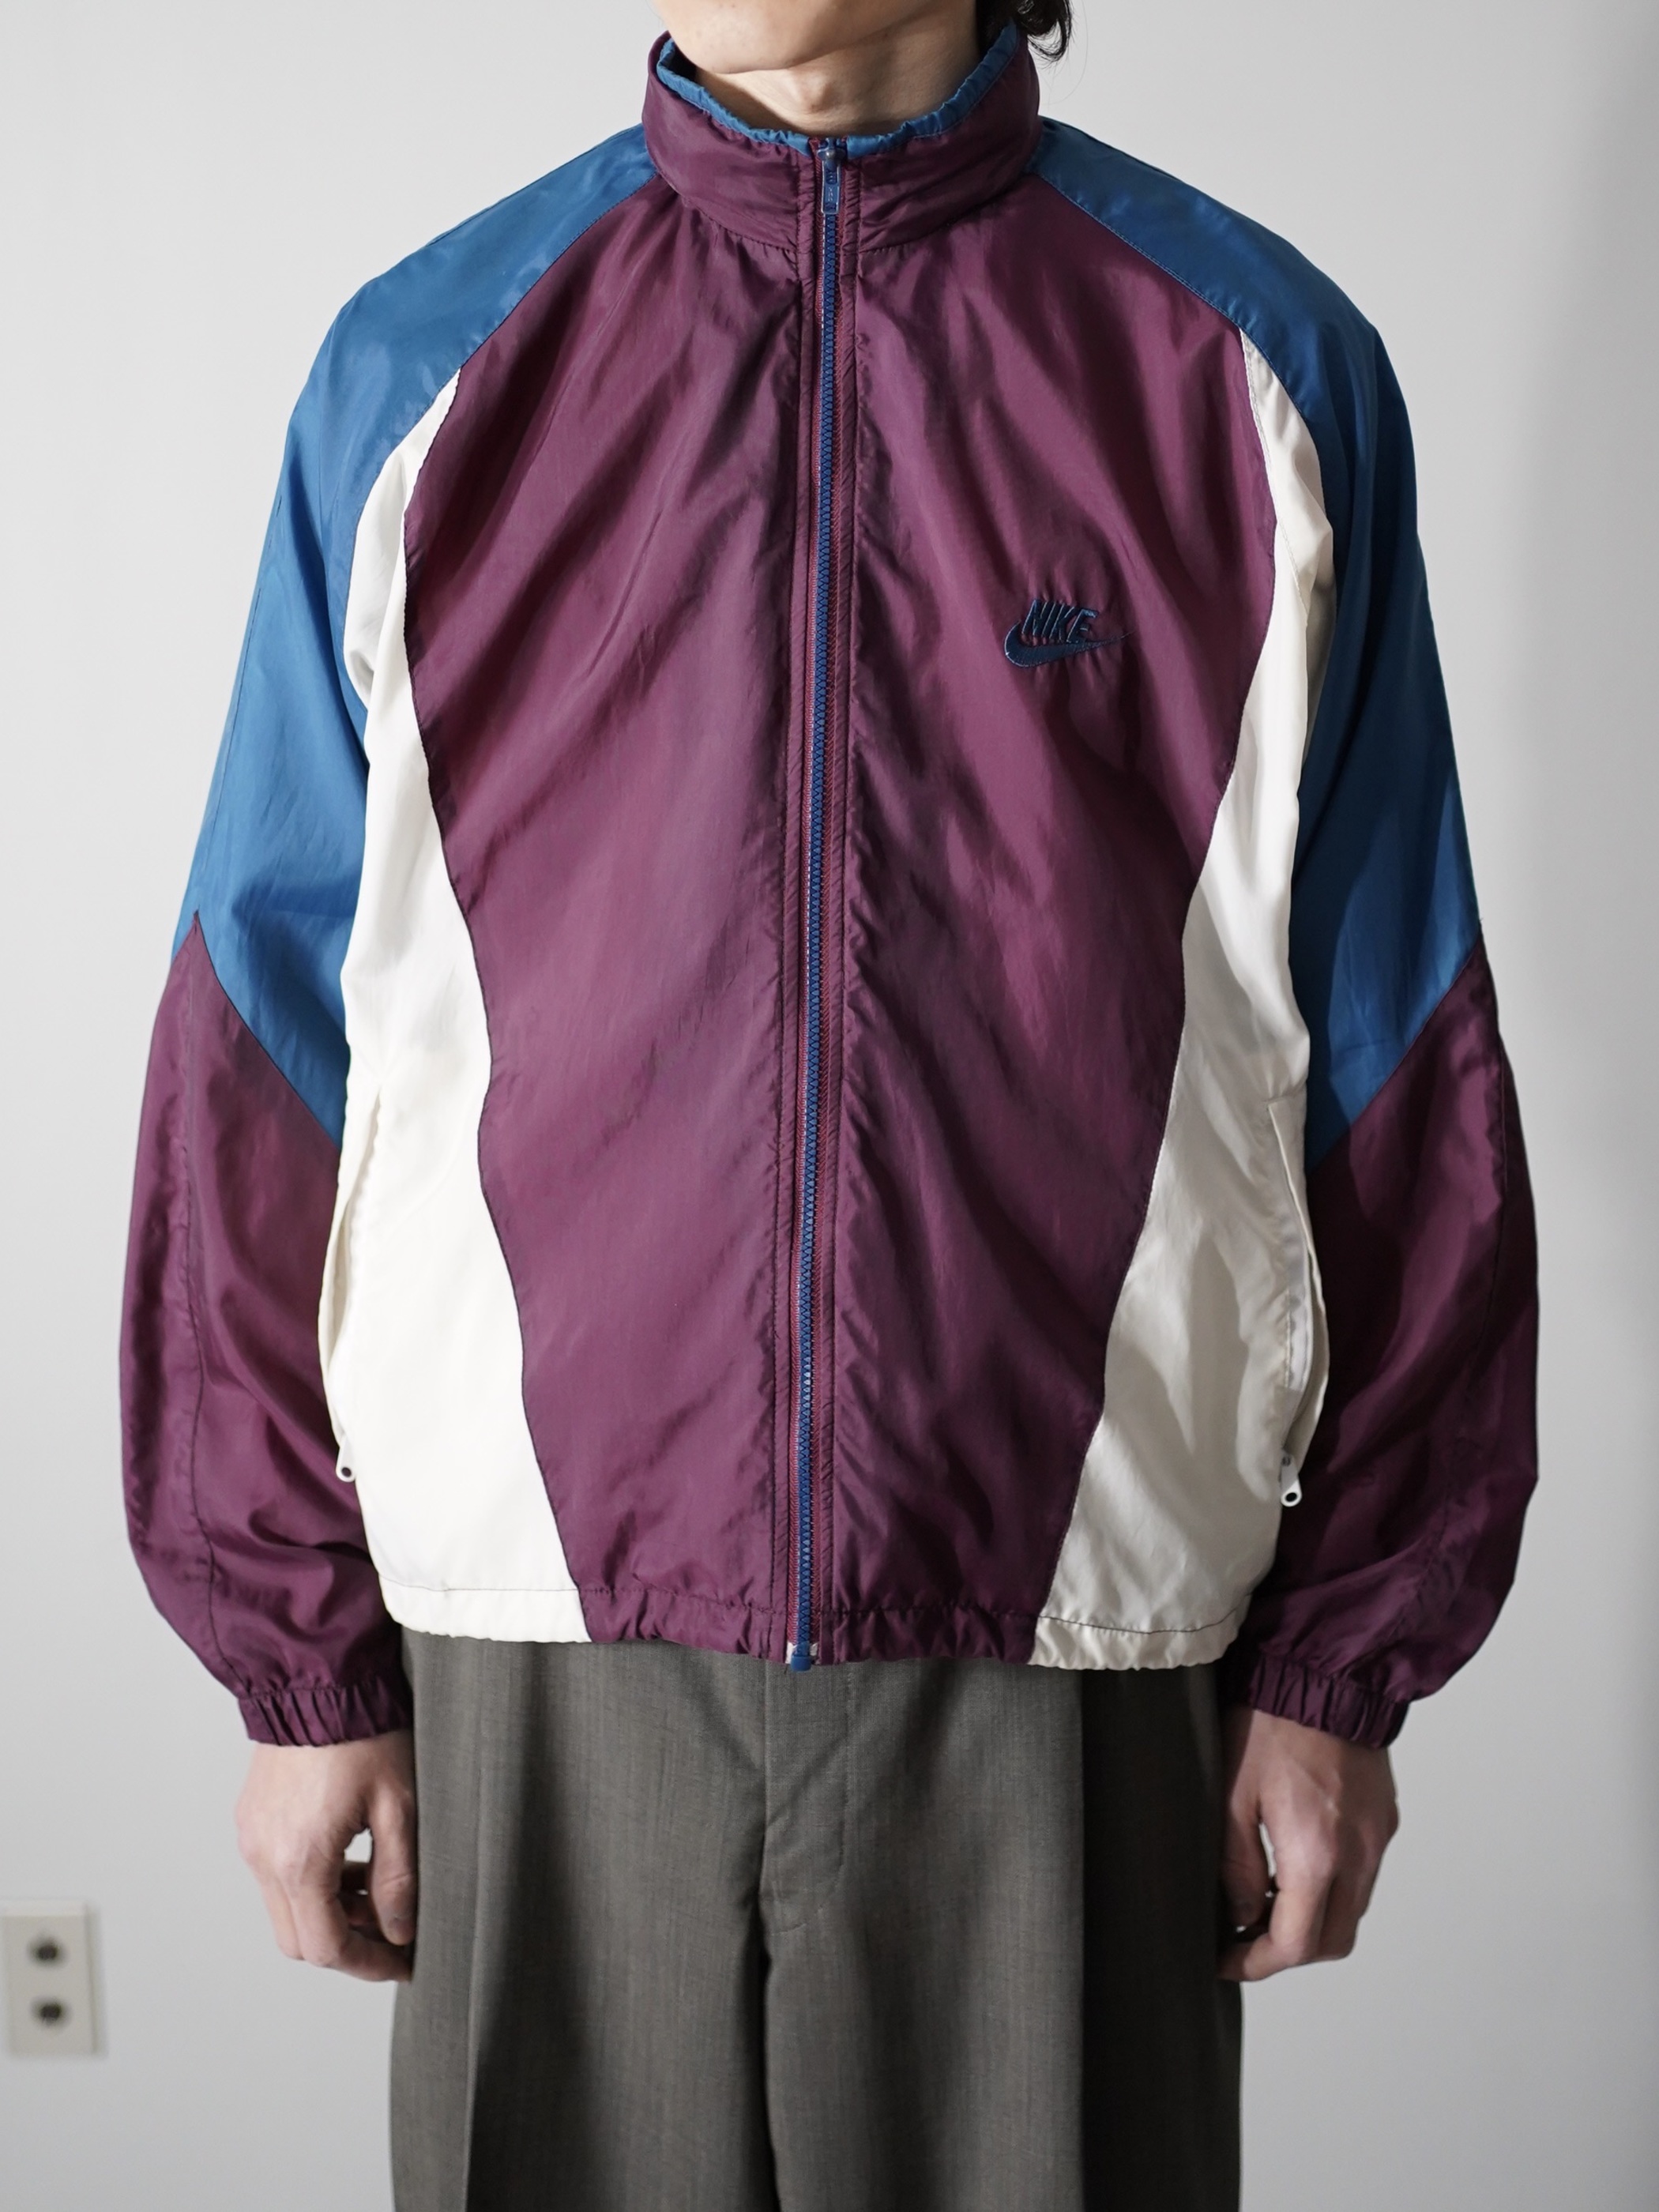 1990's NIKE Polyester shell sport jacket